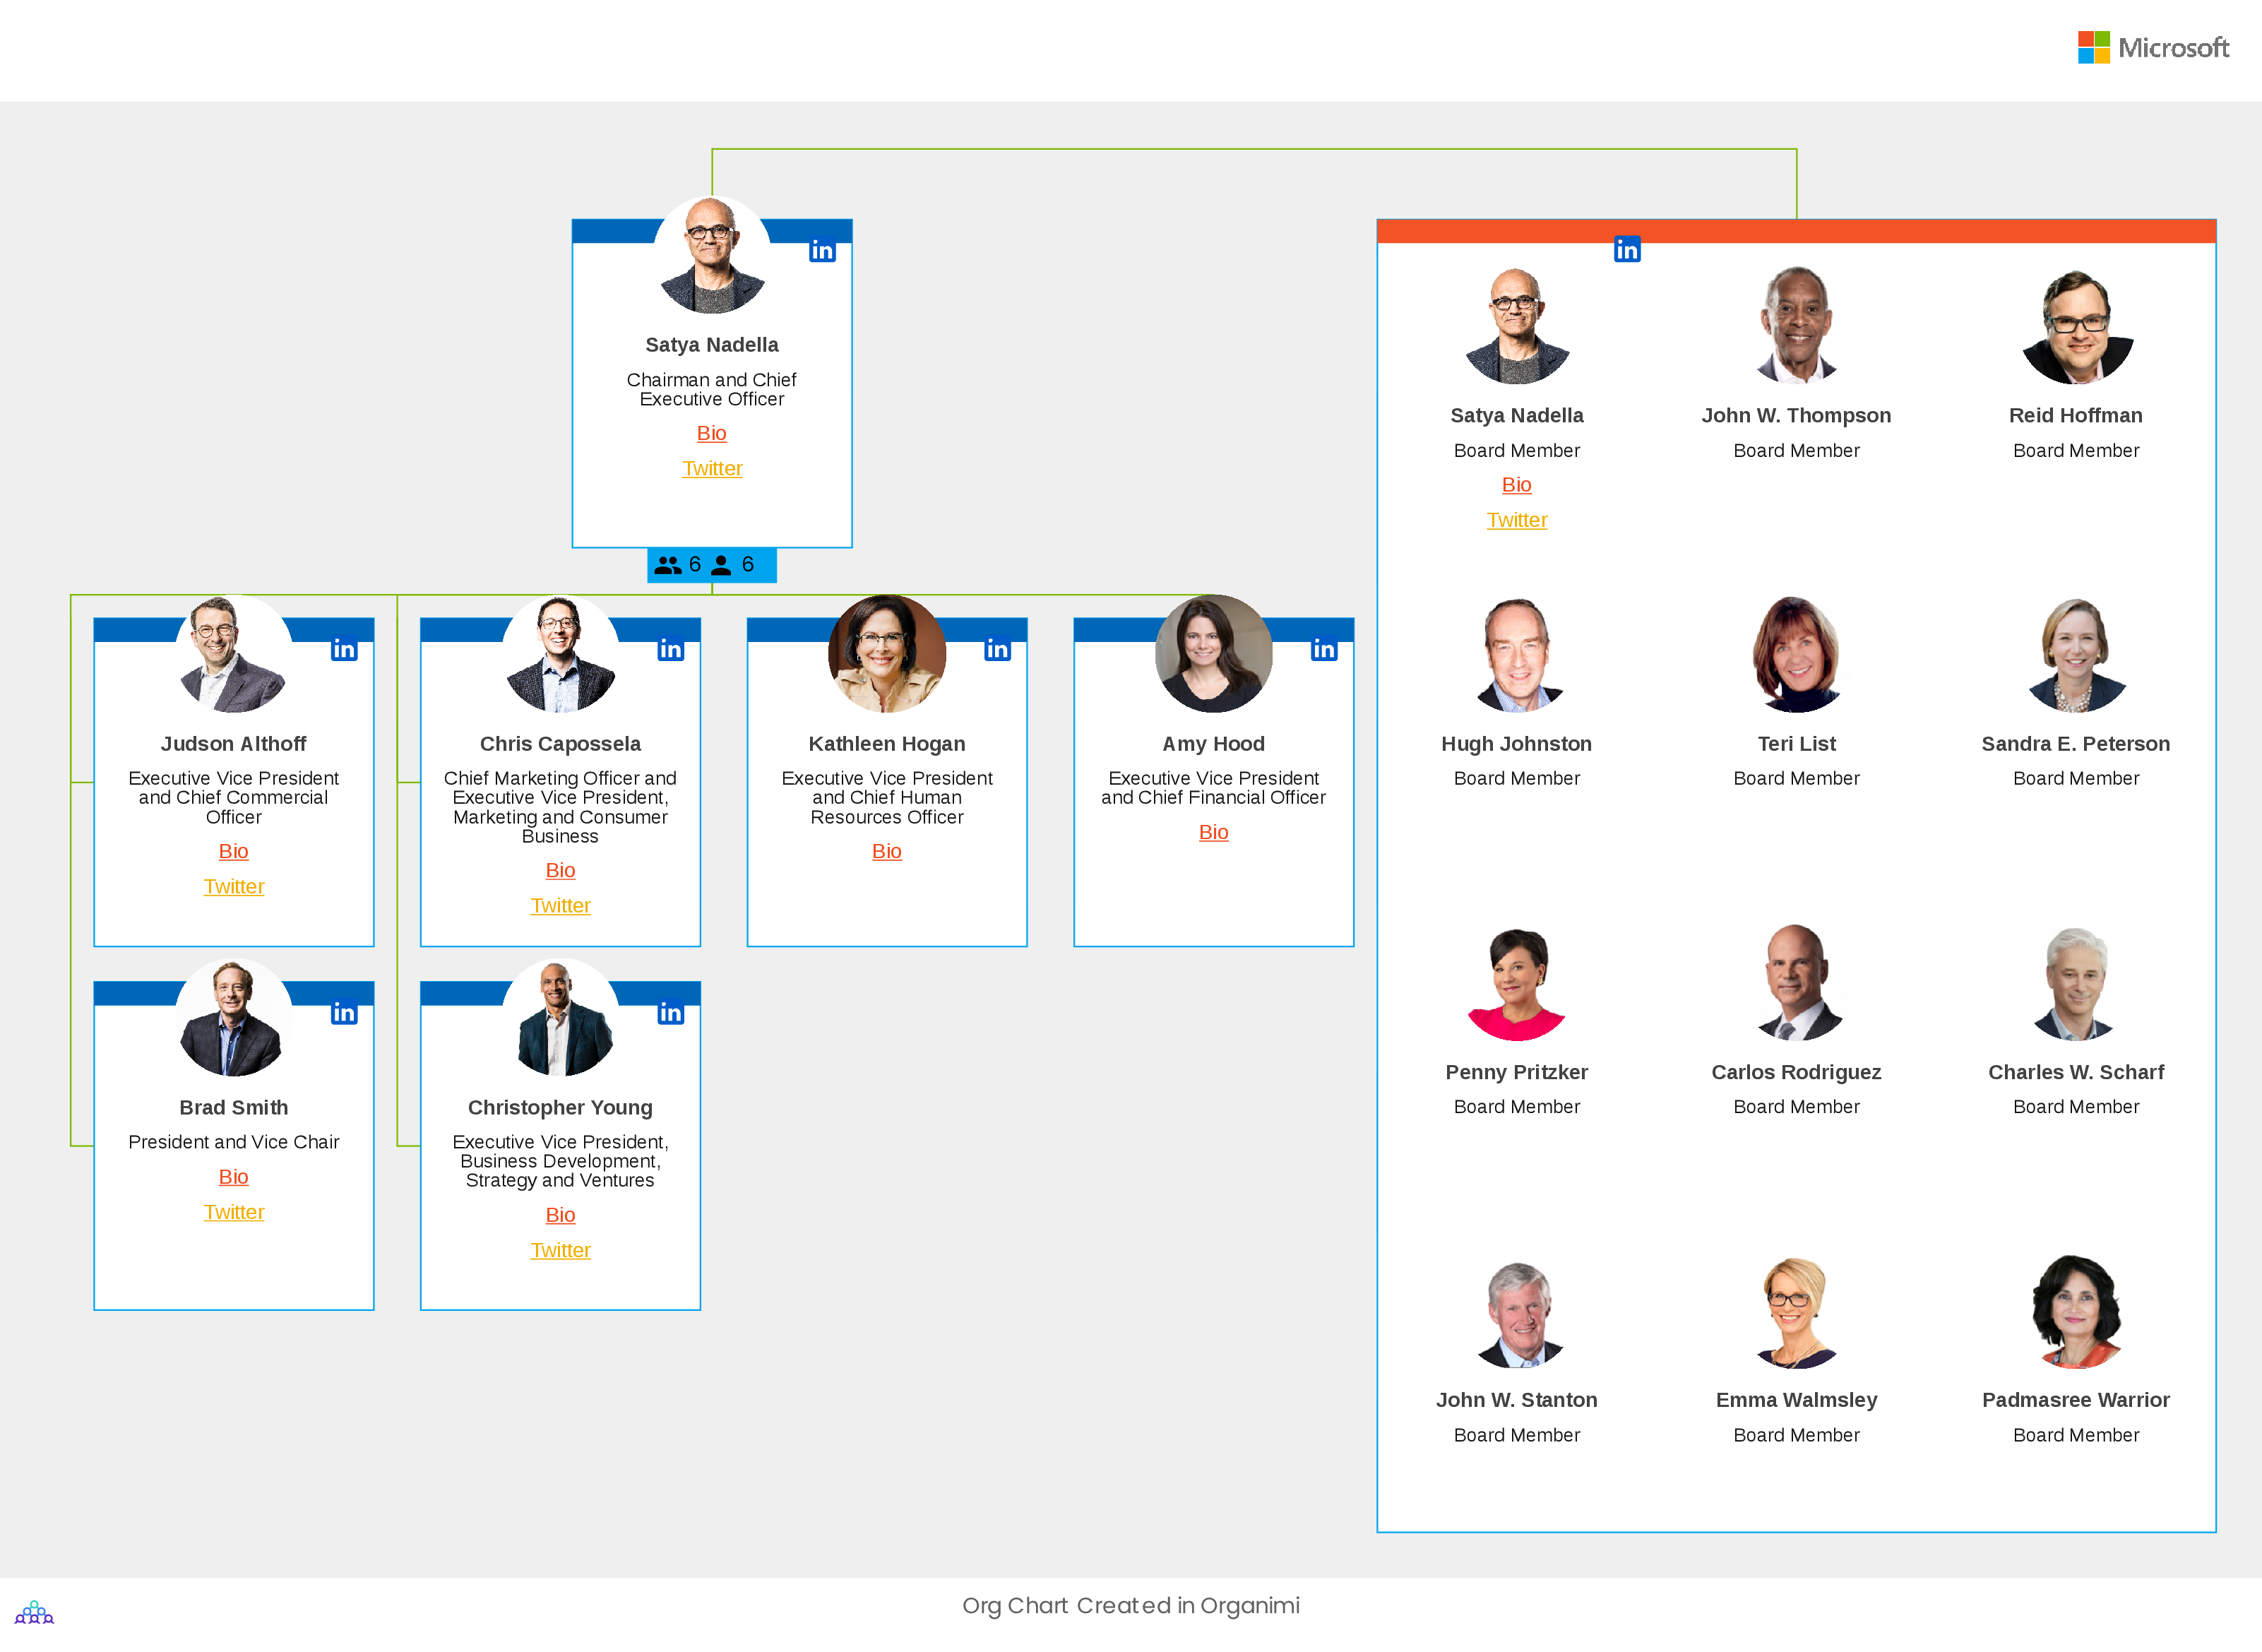 Microsoft's Organizational [Interactive Chart] |